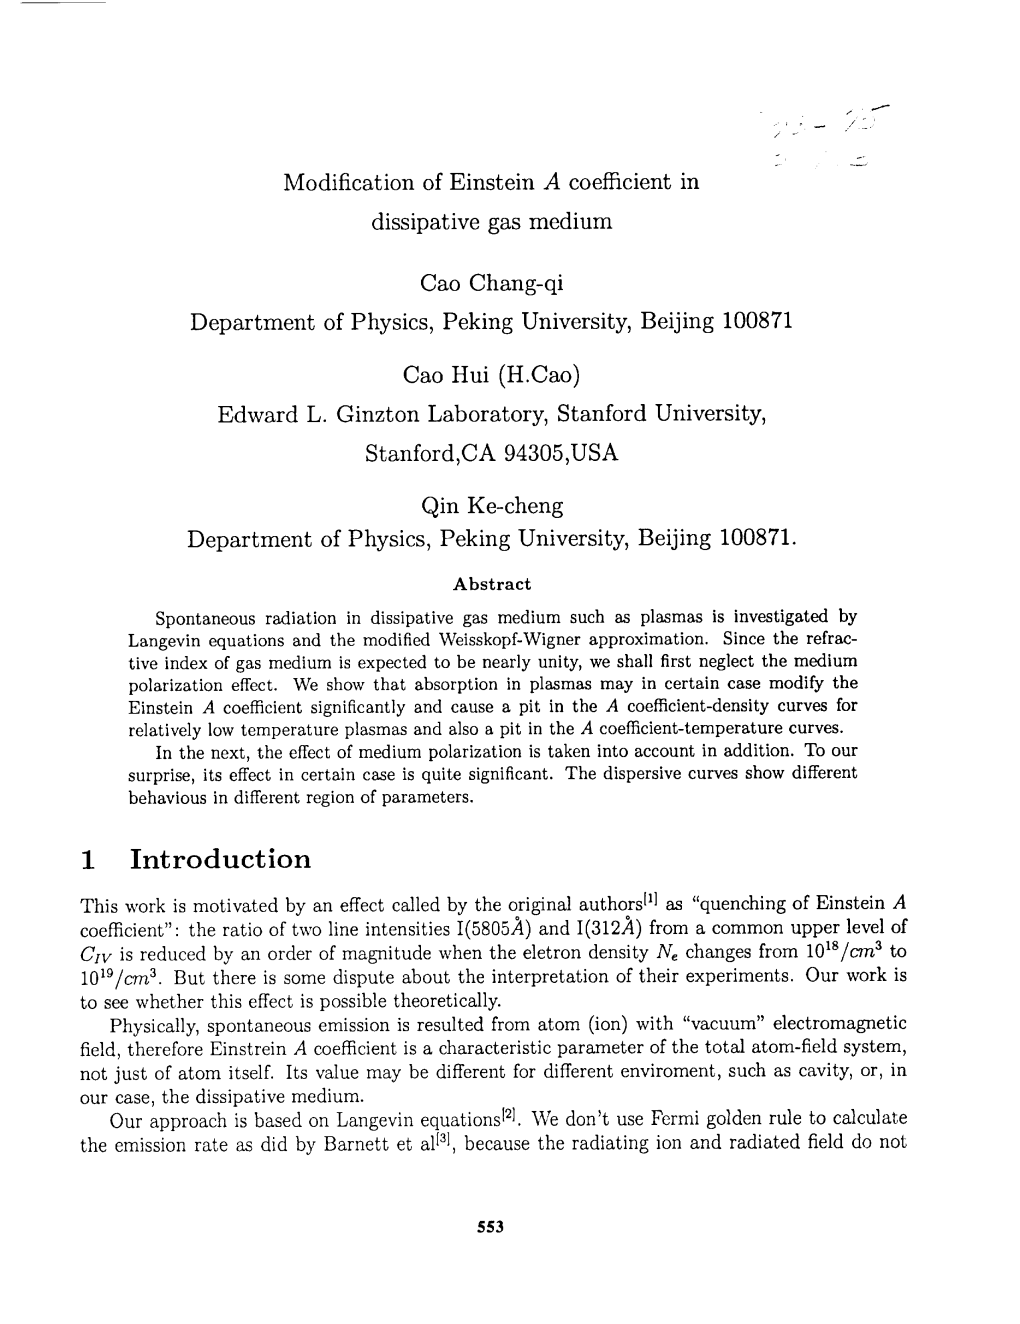 Modification of Einstein a Coefficient in Dissipative Gas Medium Cao